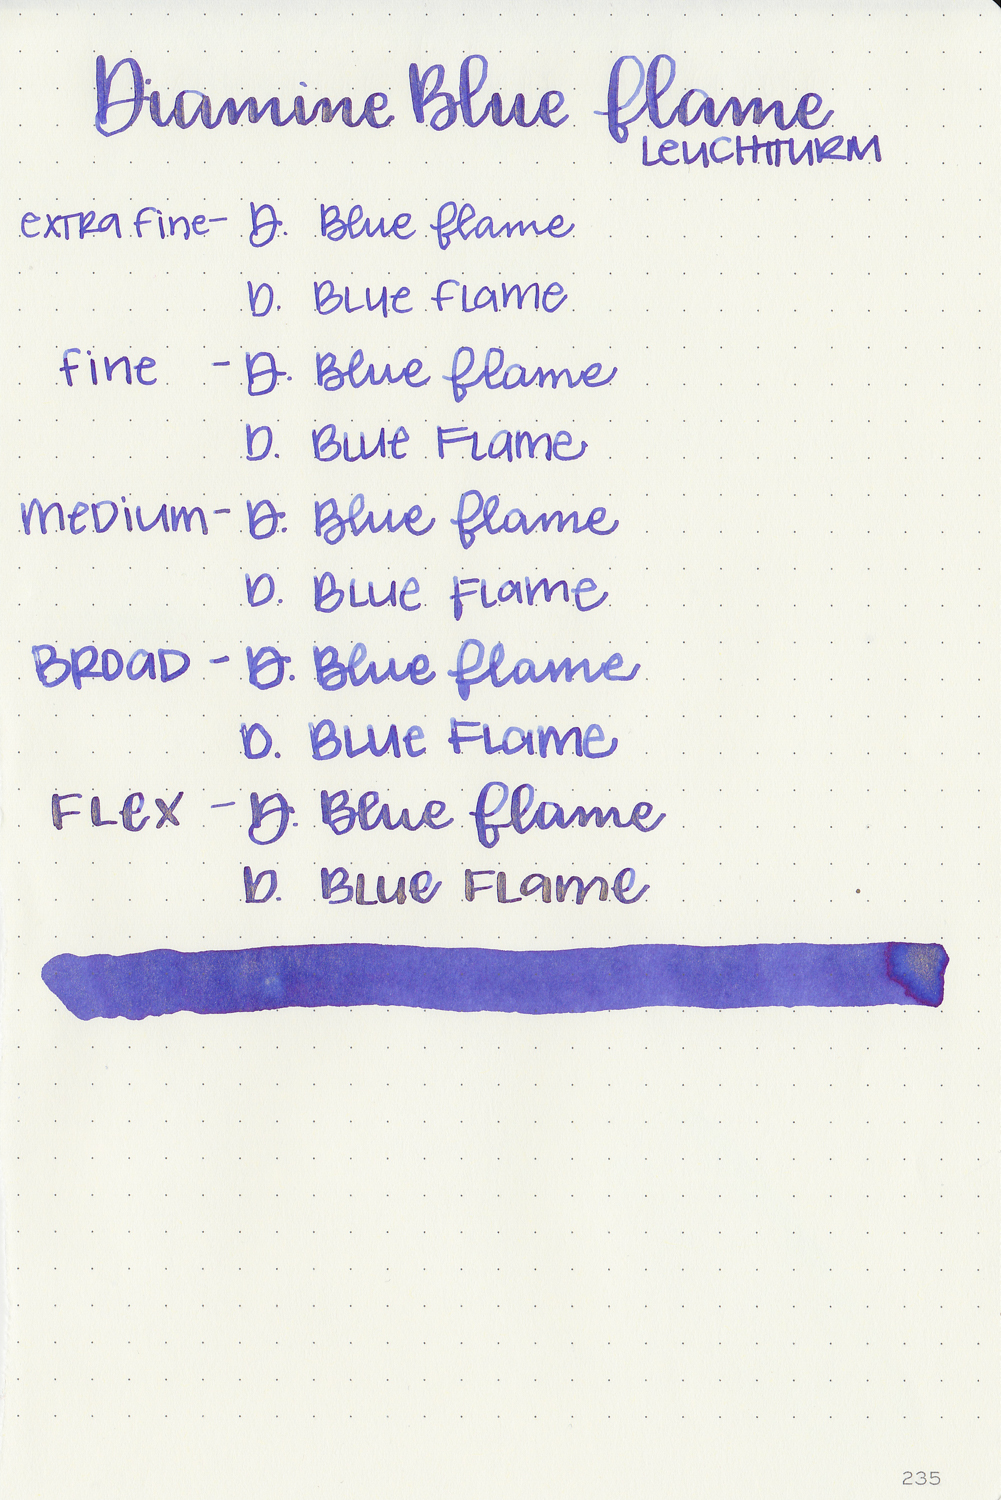 d-blue-flame-7.jpg